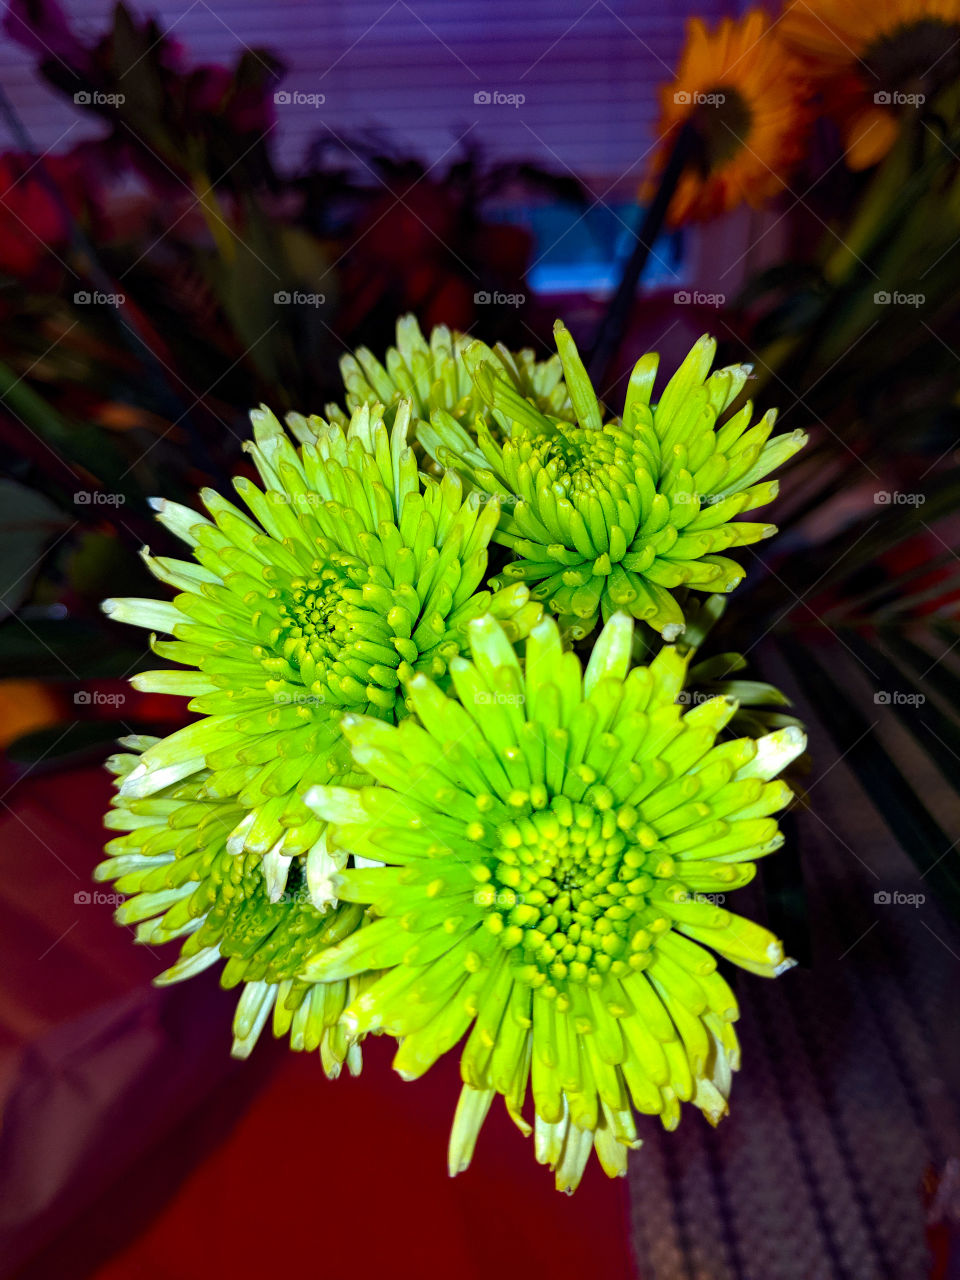 green flowers #flowers #green #indoors #💐